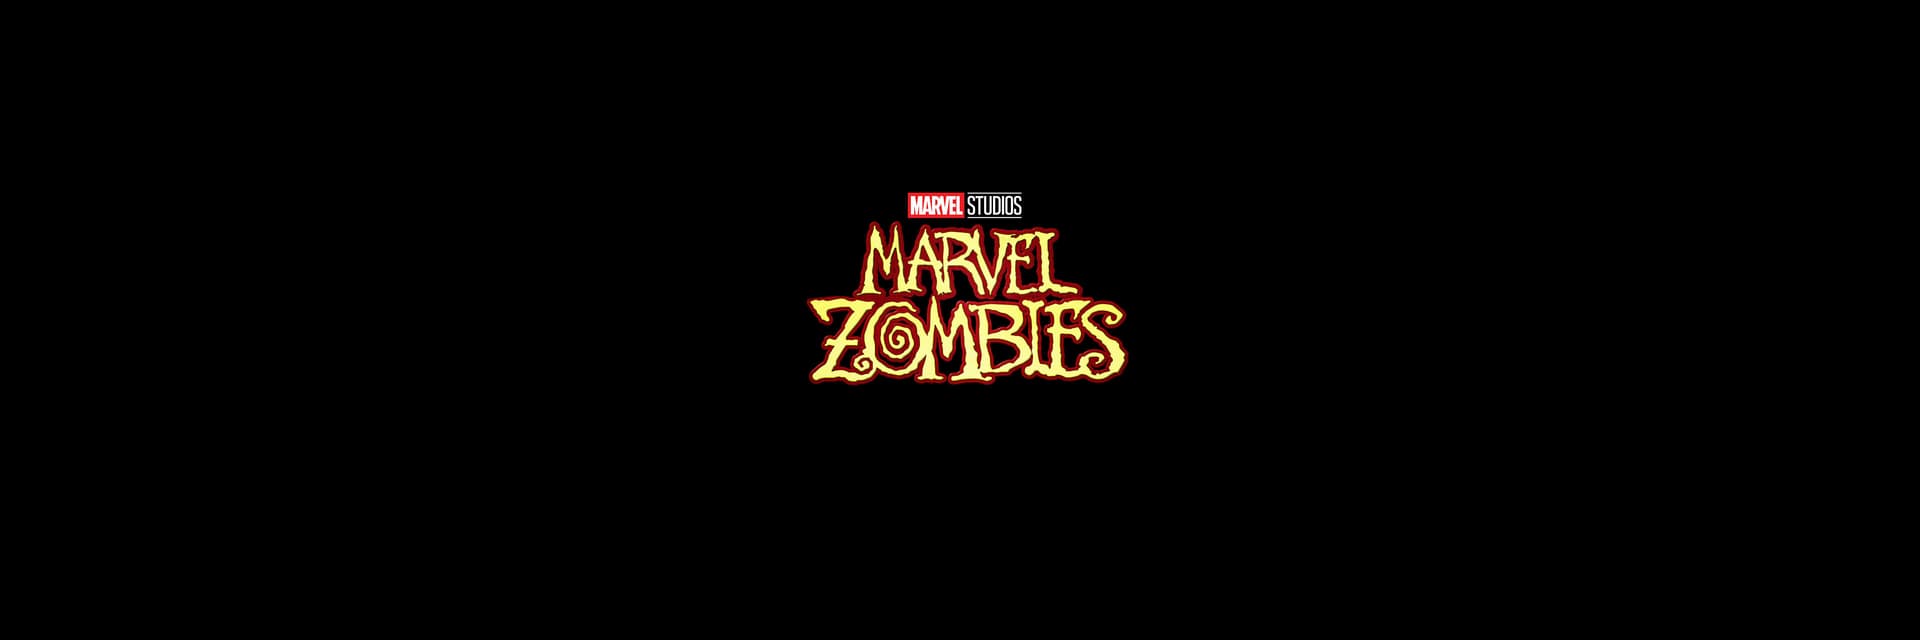 Marvel Studios' Marvel Zombies Disney+ Plus TV Show Season 1 Logo on Black